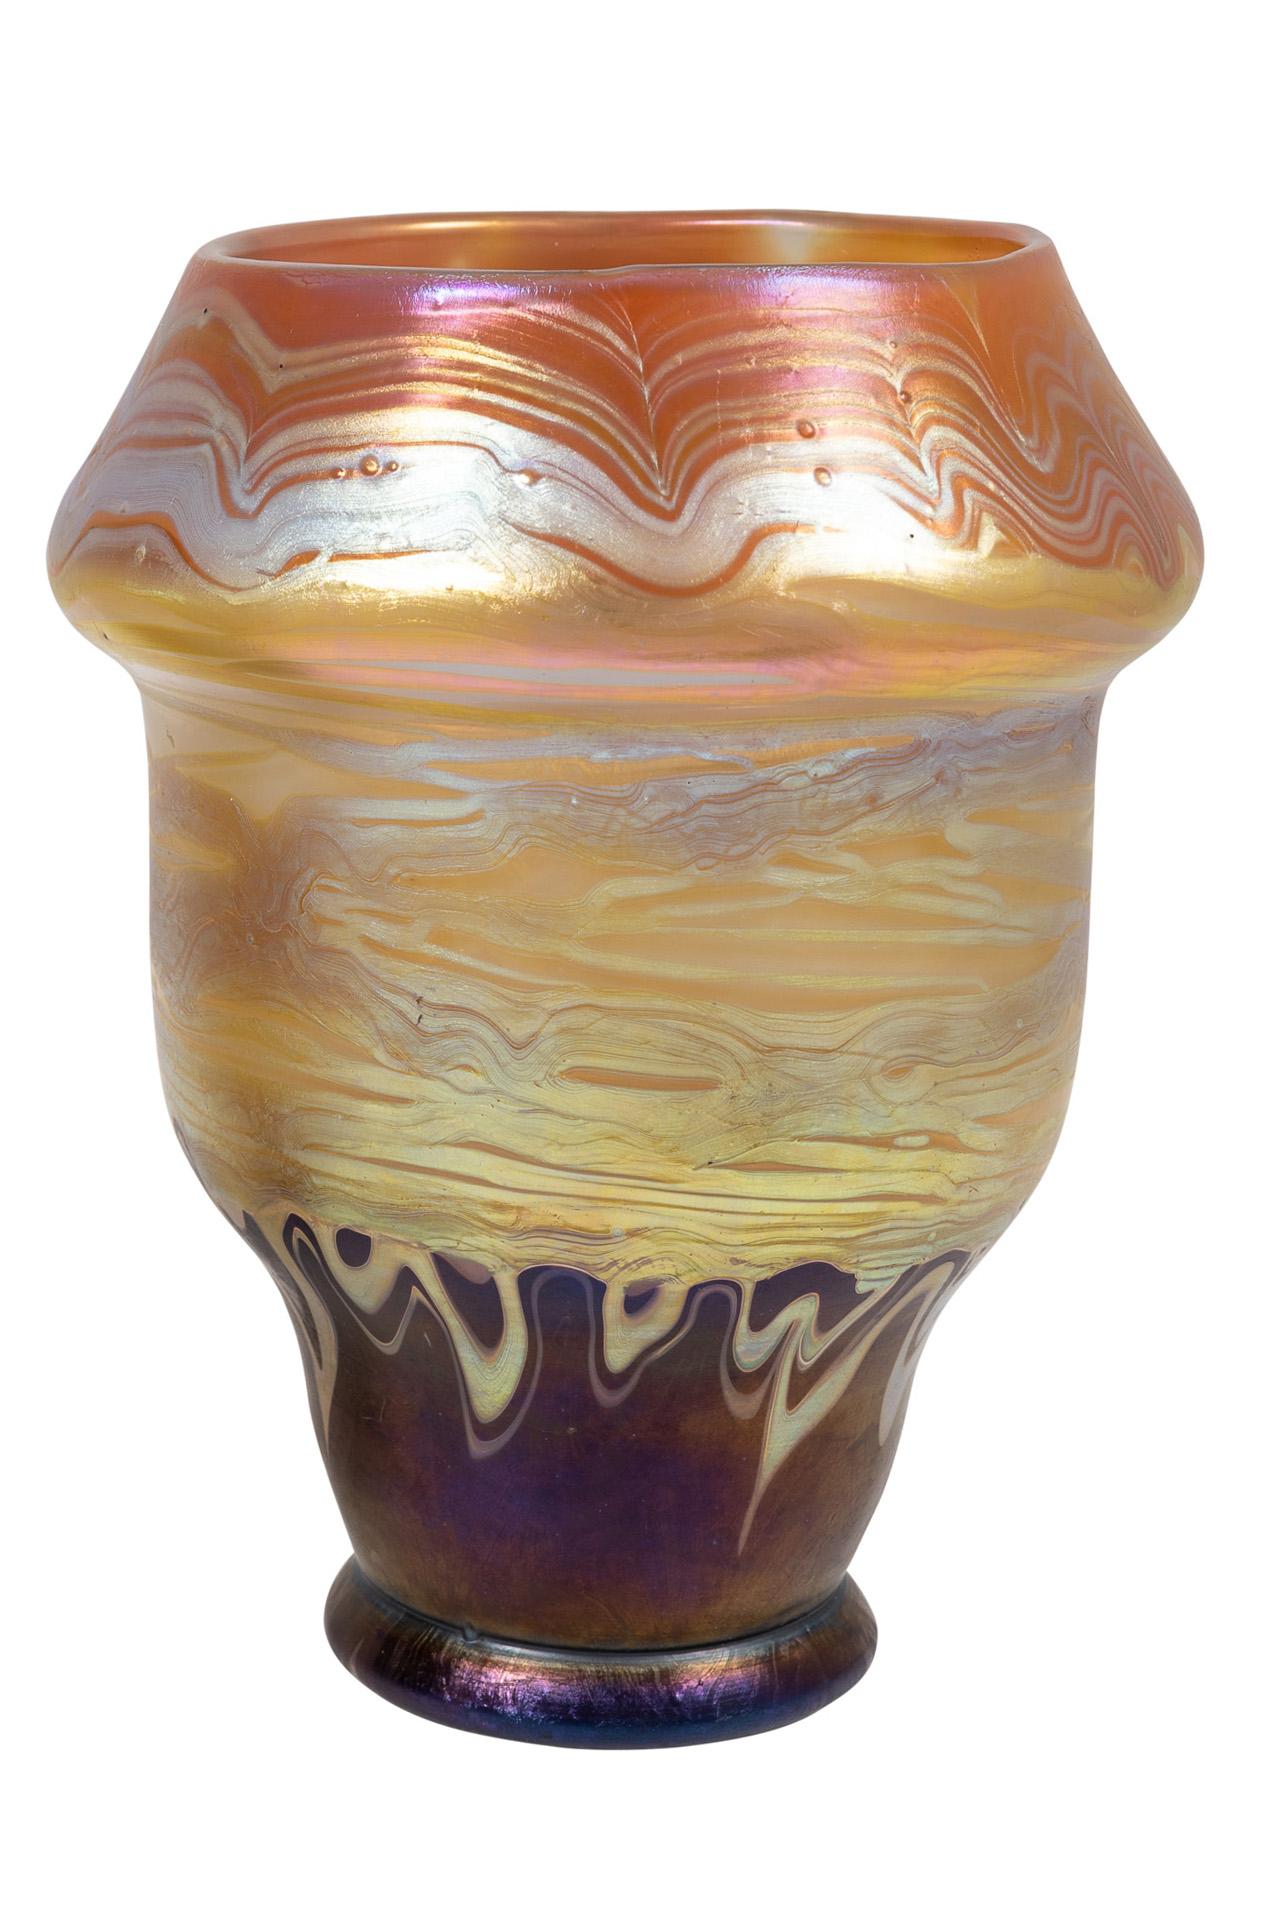 Bohemian glass vase, manufactured by Johann Loetz Witwe, PG 358 decoration (world exhibition decoration), ca. 1900, signed, orange, brown, ochre, silver, white, Bohemia, Viennese Art Nouveau, Jugendstil, Art Deco, art glass, iridescent